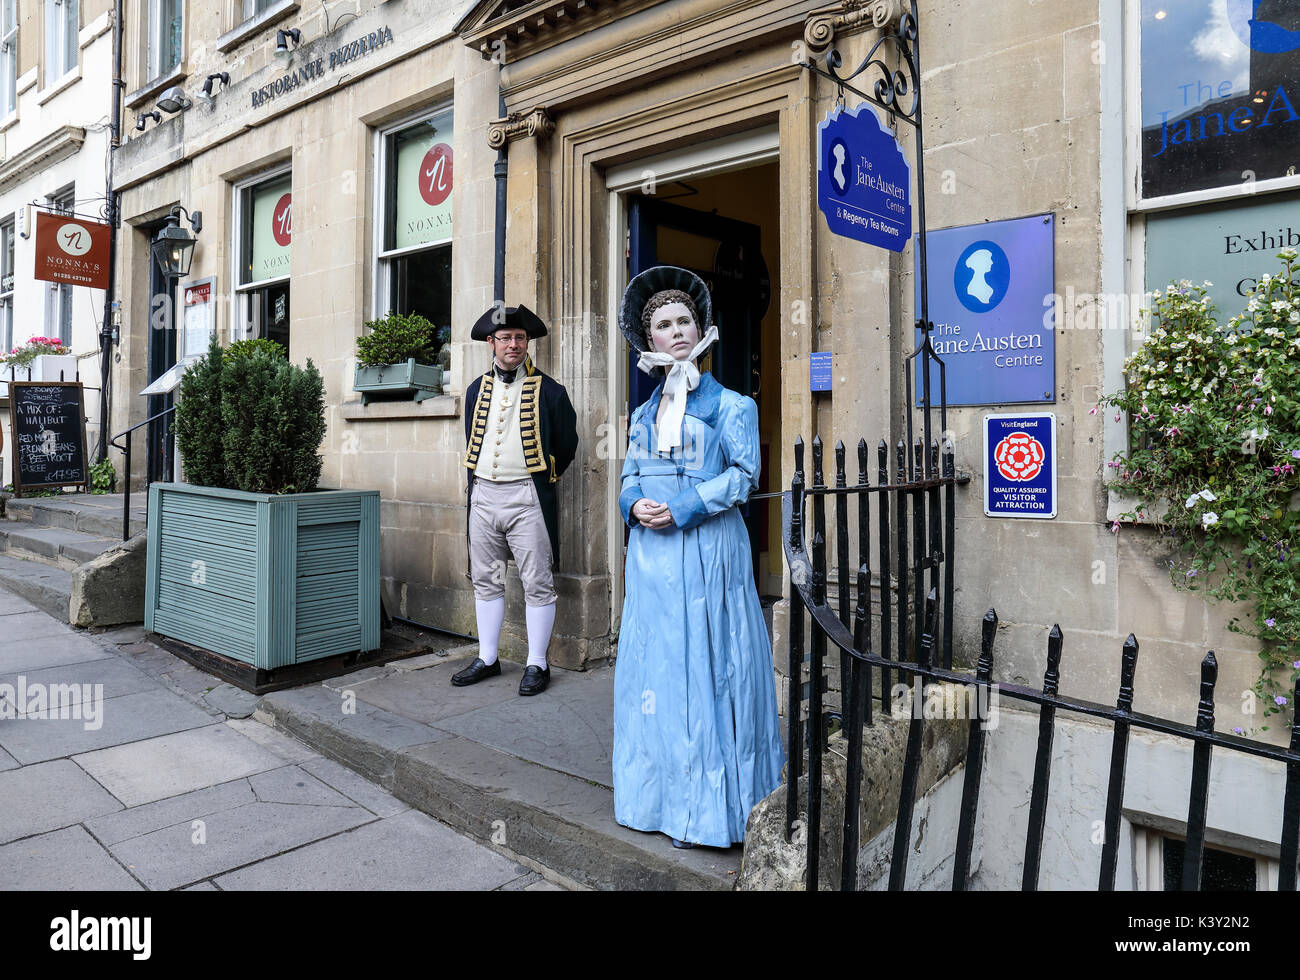 Outside The Jane Austen Centre, Bath, England, UK Stock Photo